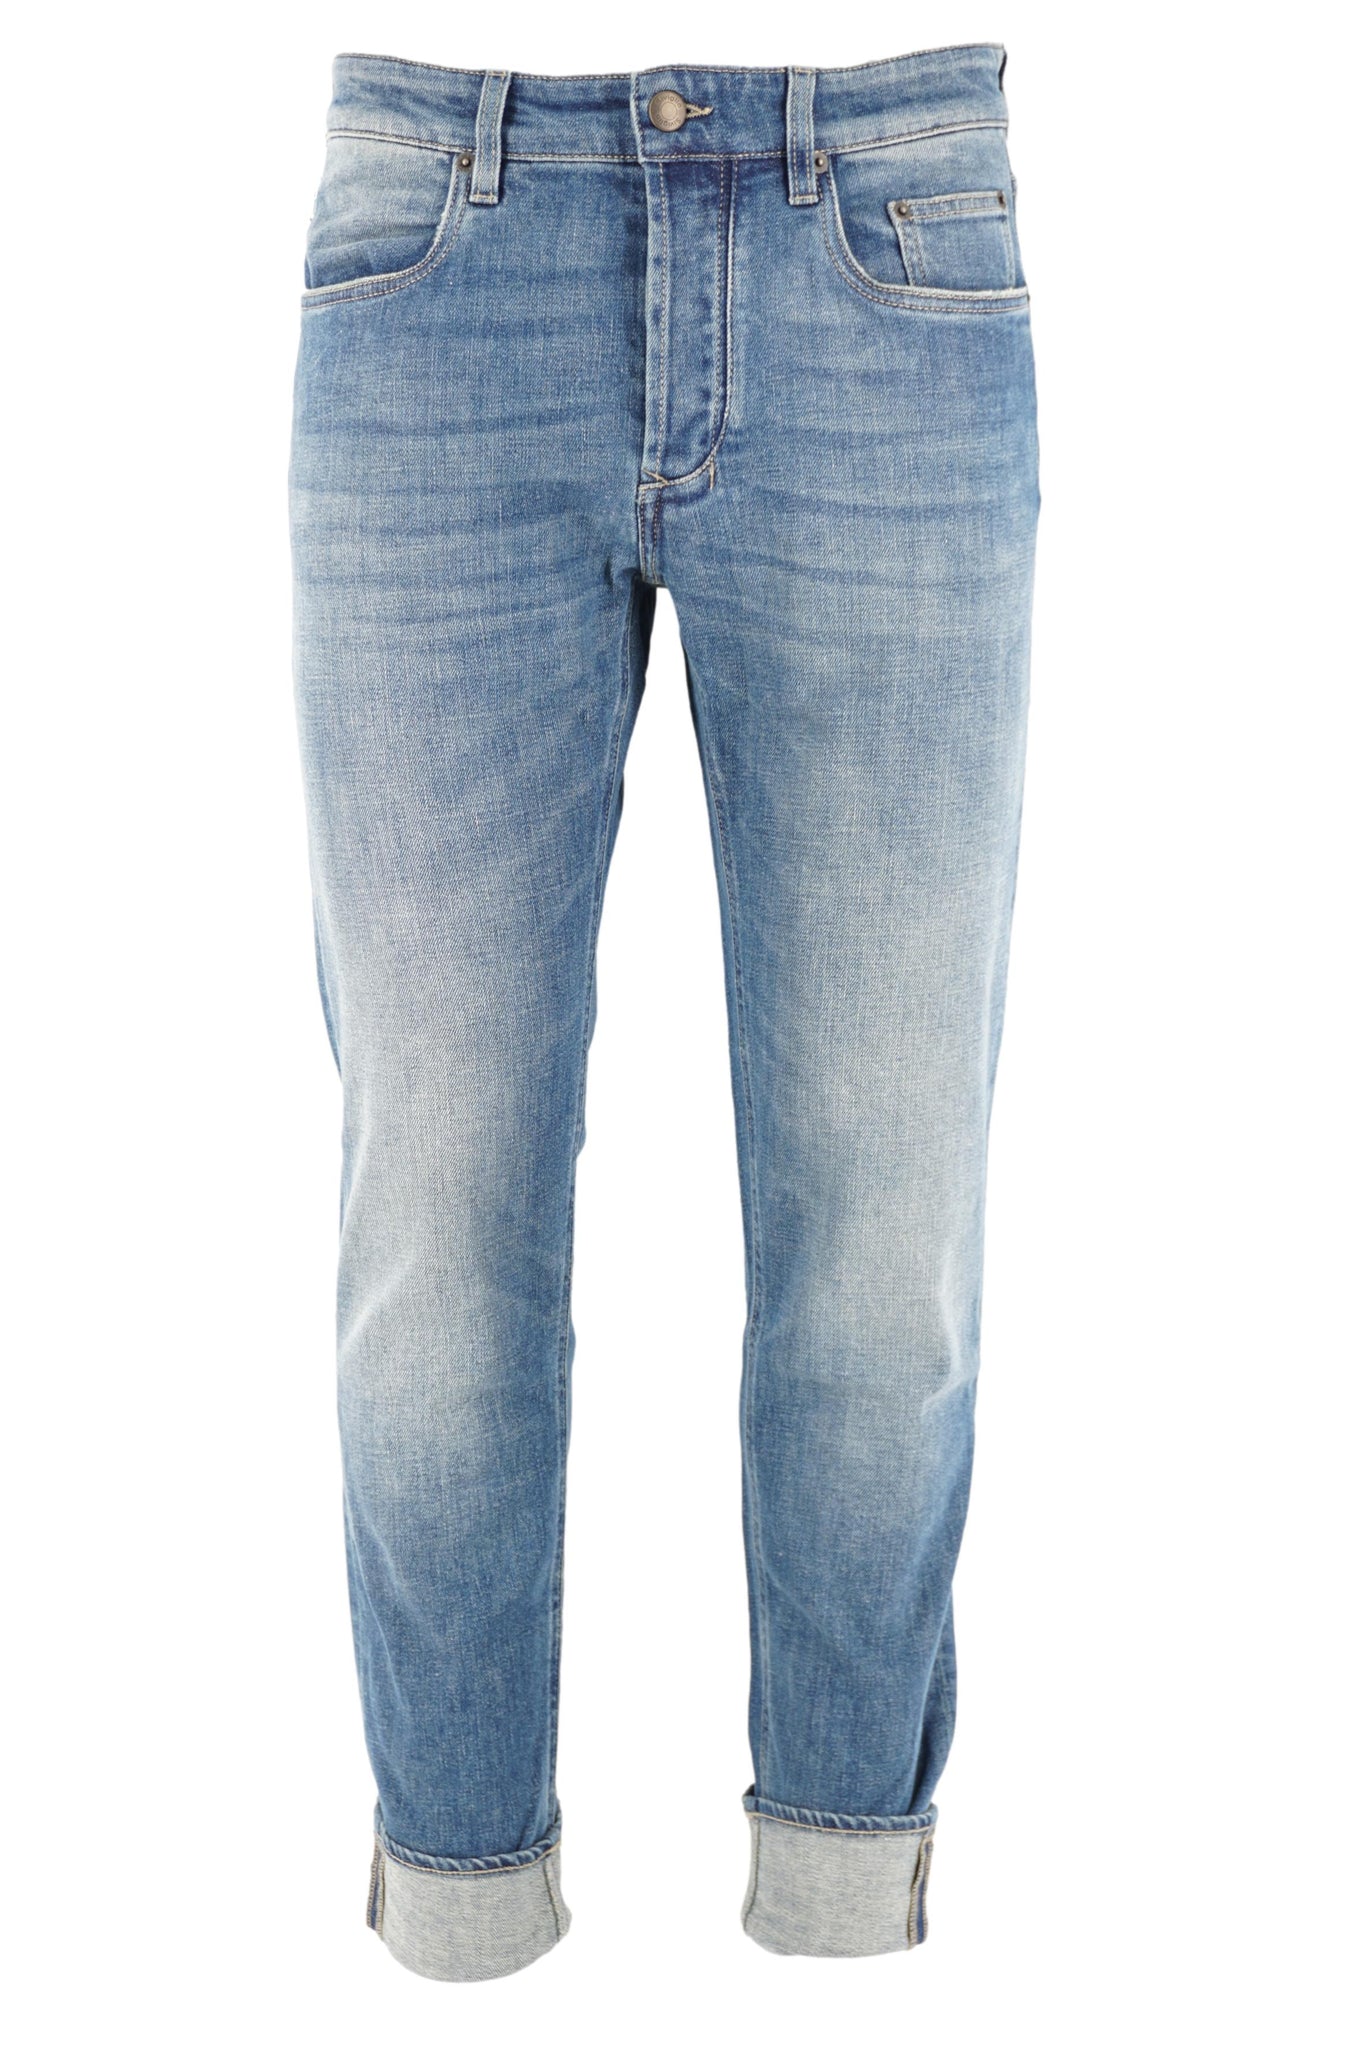 Jeans Cinque Tasche Slim Fit / Bluette - Ideal Moda